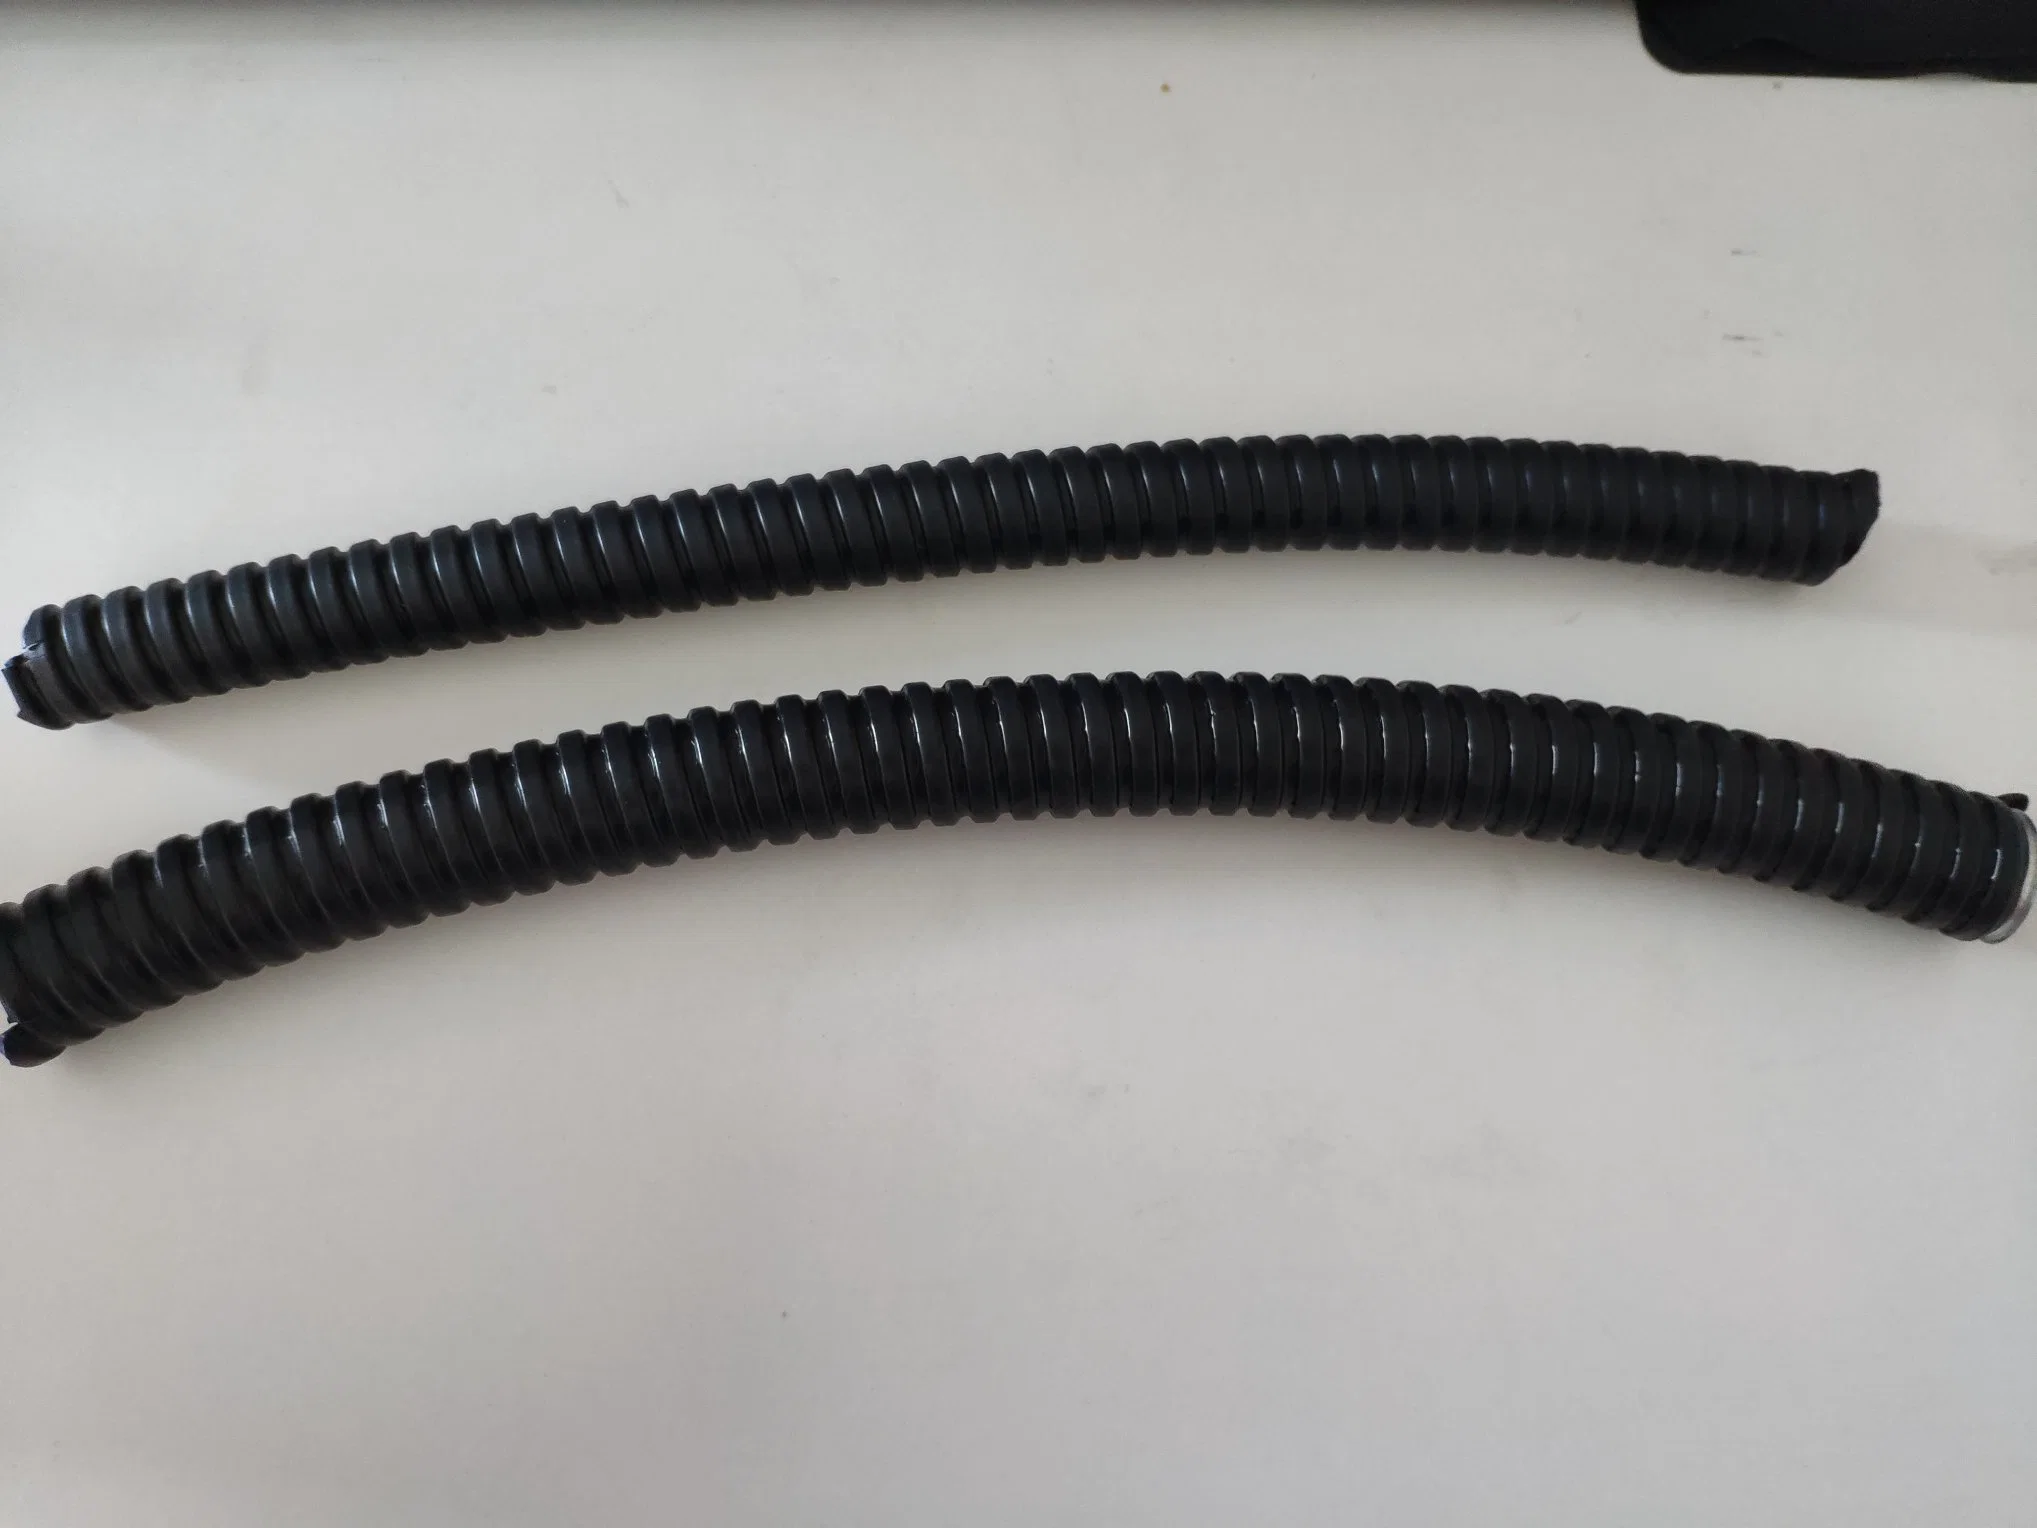 Conducto flexible recubierto de PVC GI para protección de cables